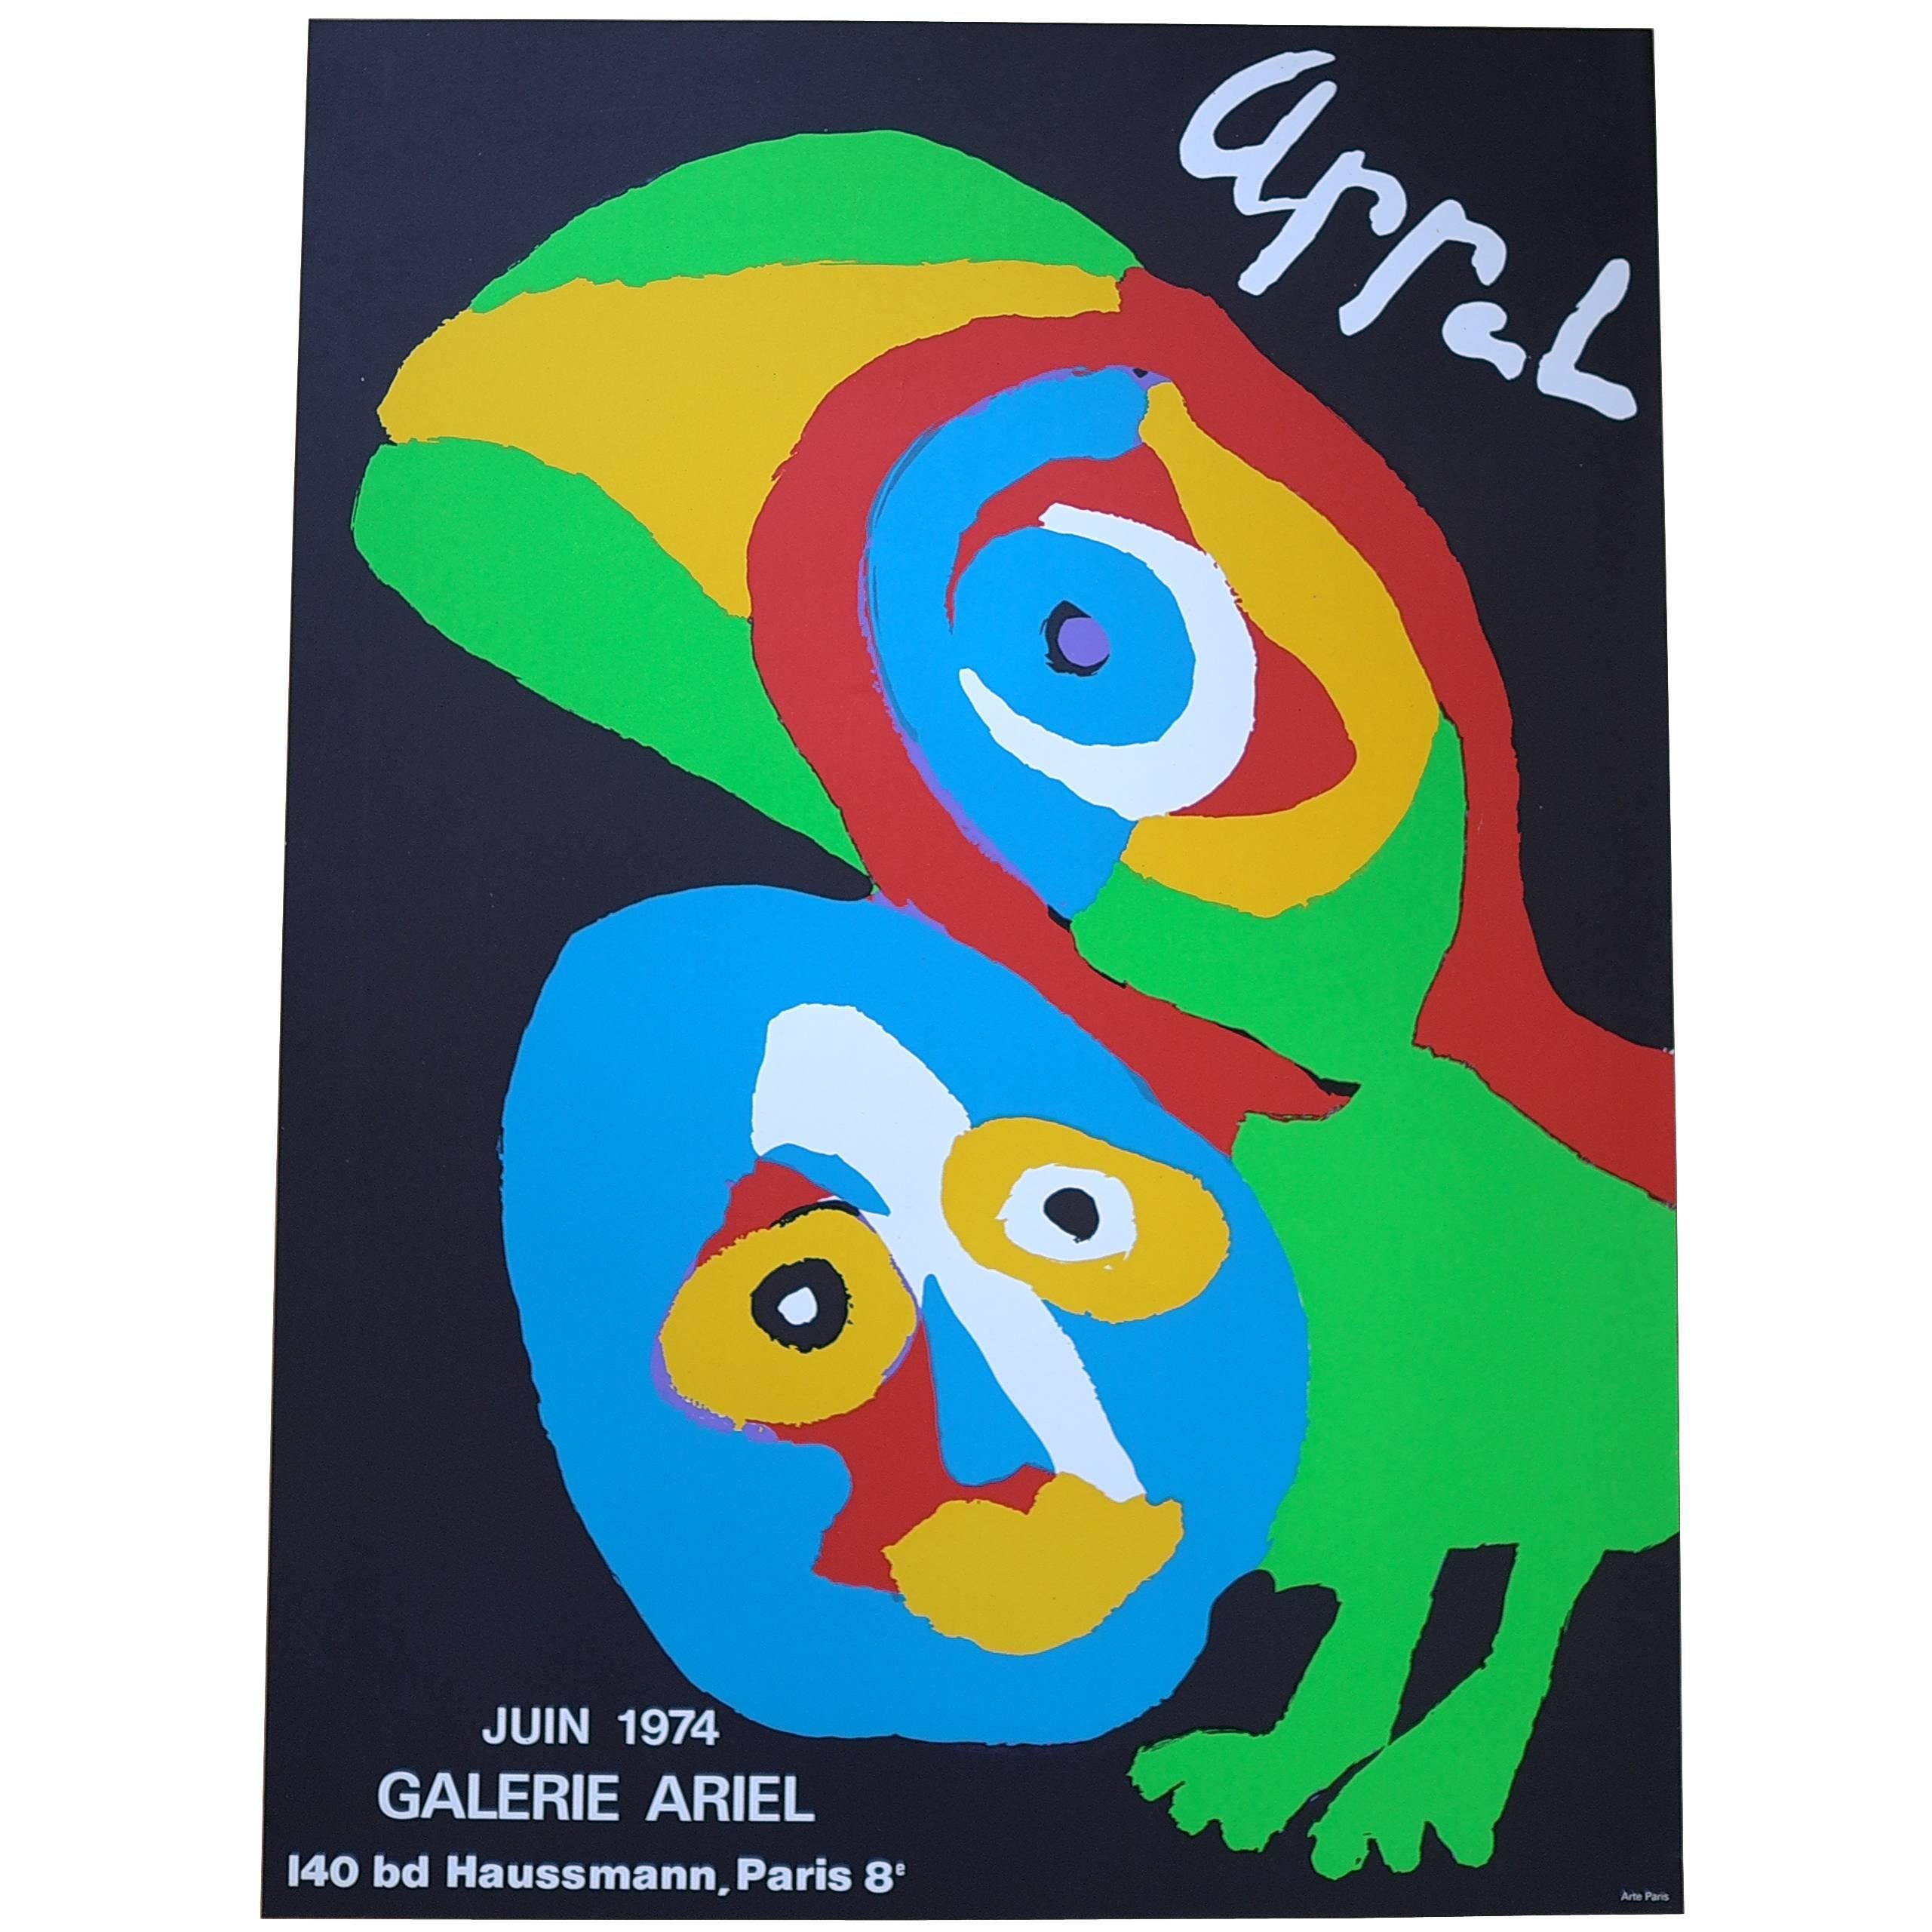 Karel Appel New Old Stock Lithograph Poster, Galerie Ariel,  Paris, 1974